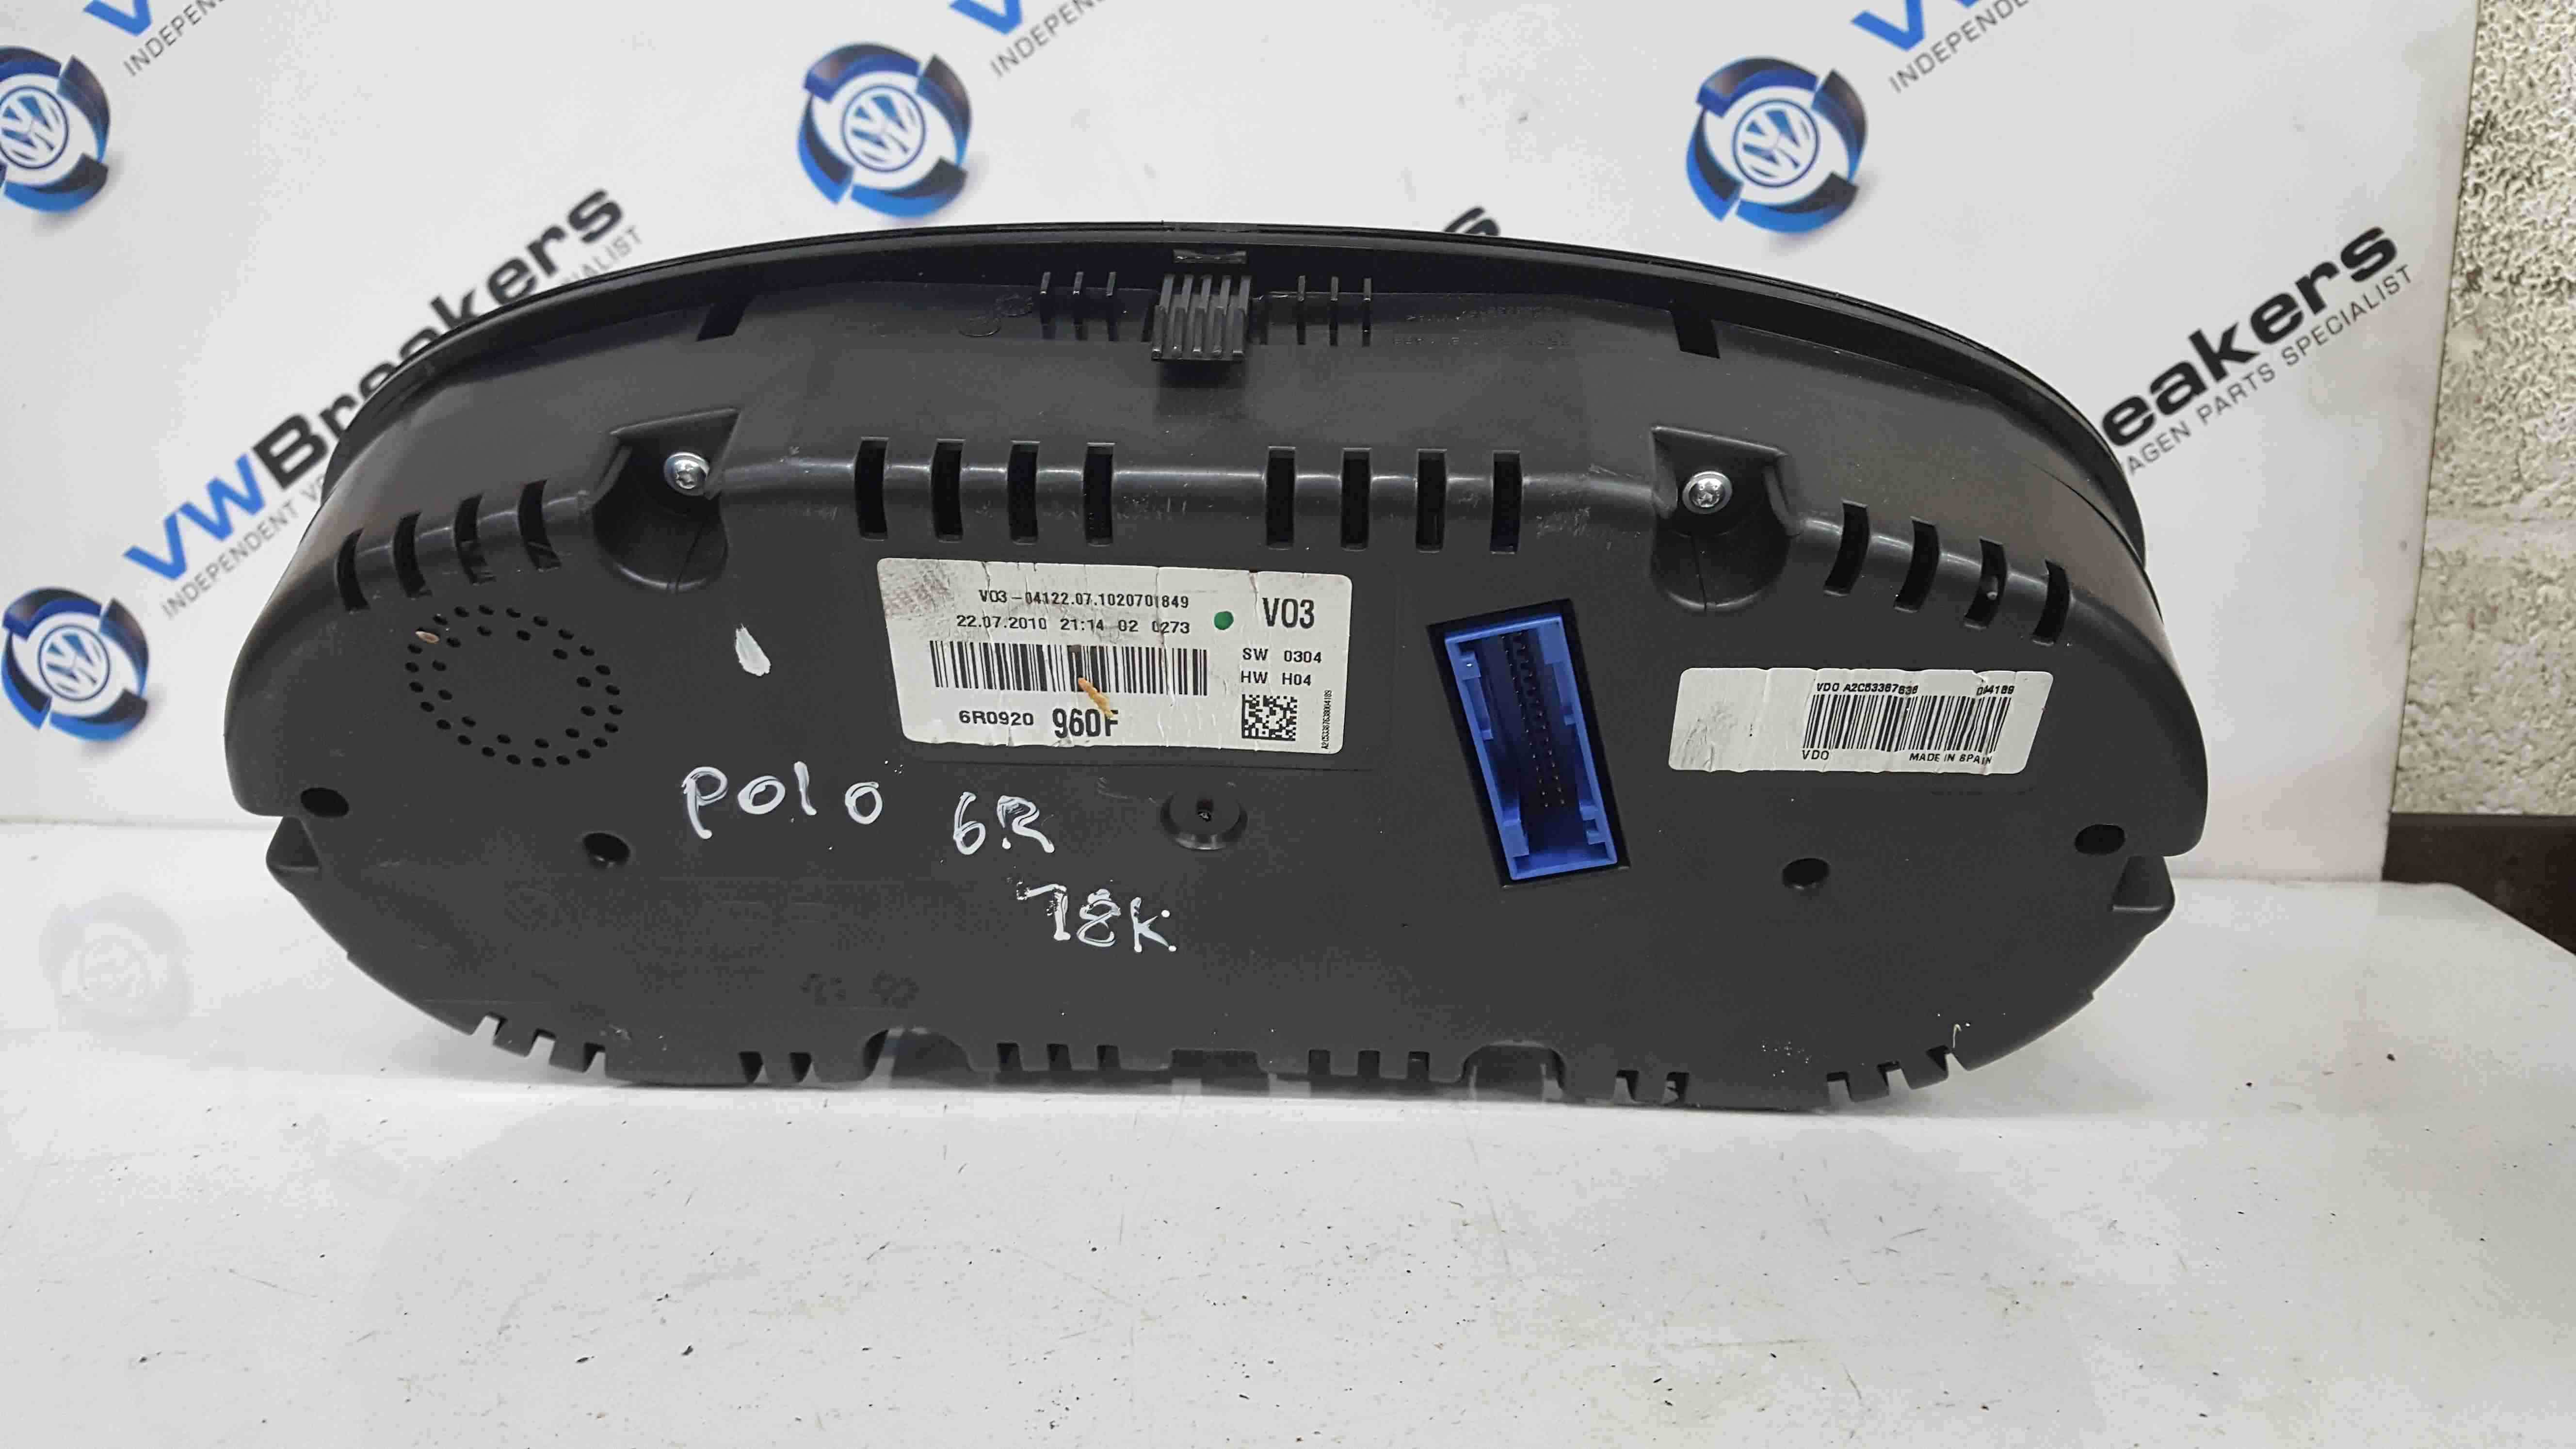 Volkswagen Polo 6R 2009-2014 Instrument Panel Dials Gauges Clocks 6R0920960f